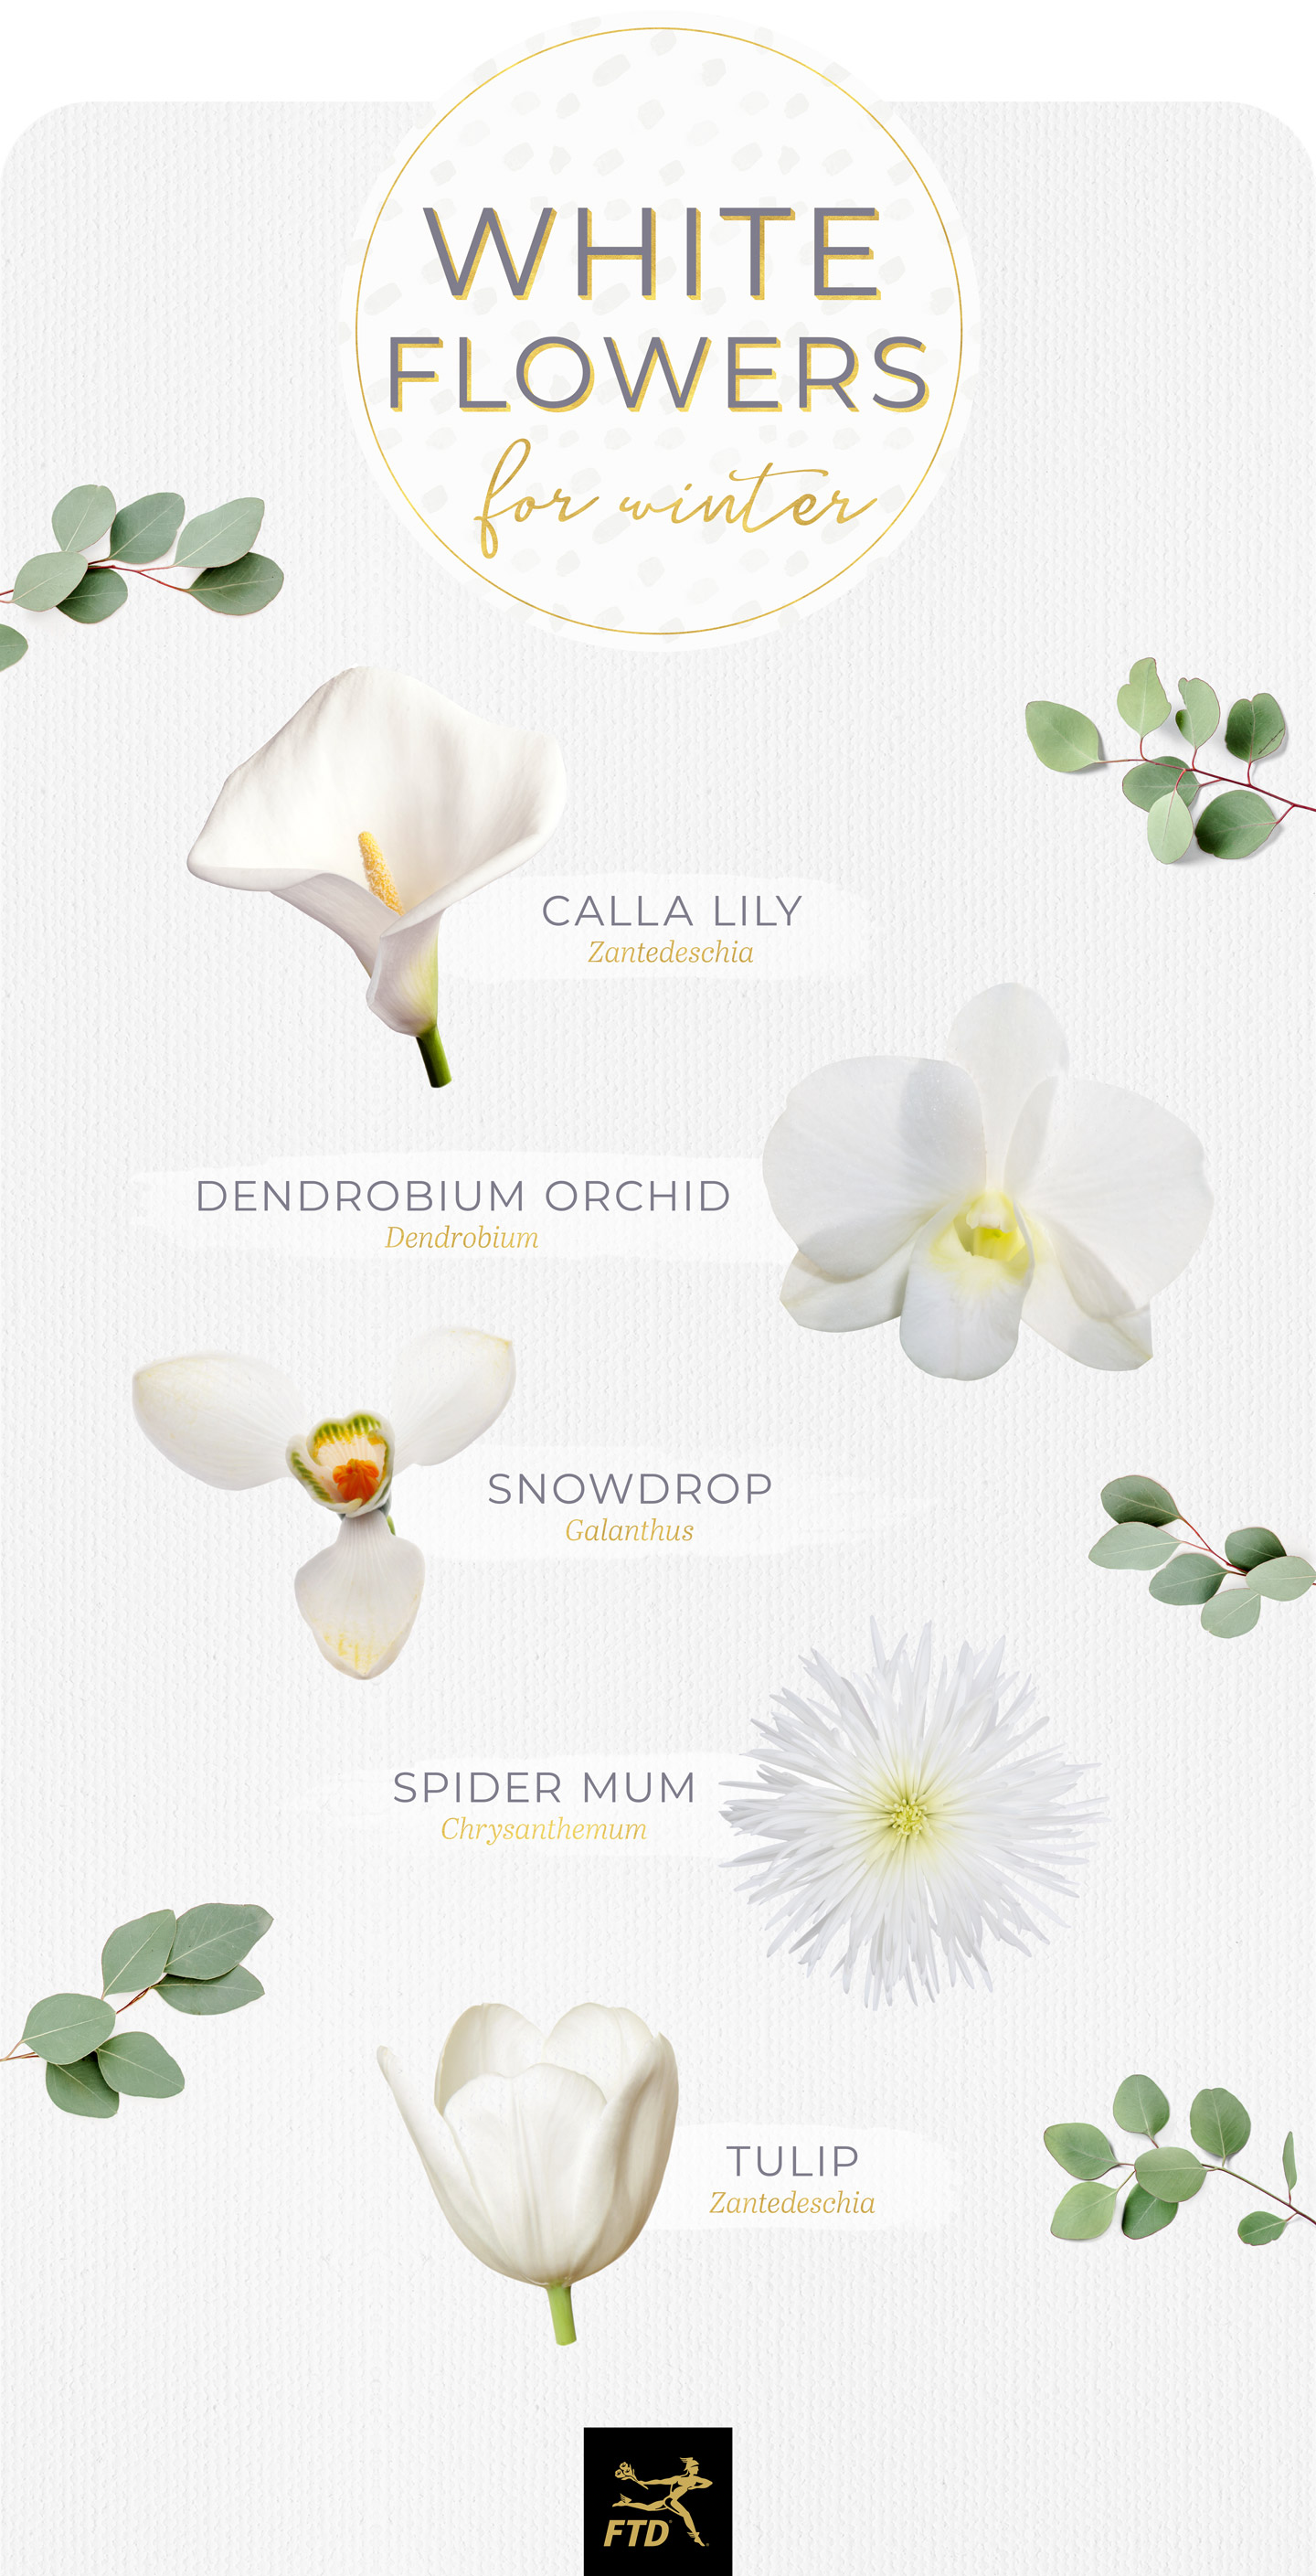 White flowers names, Small white flowers, Flower names